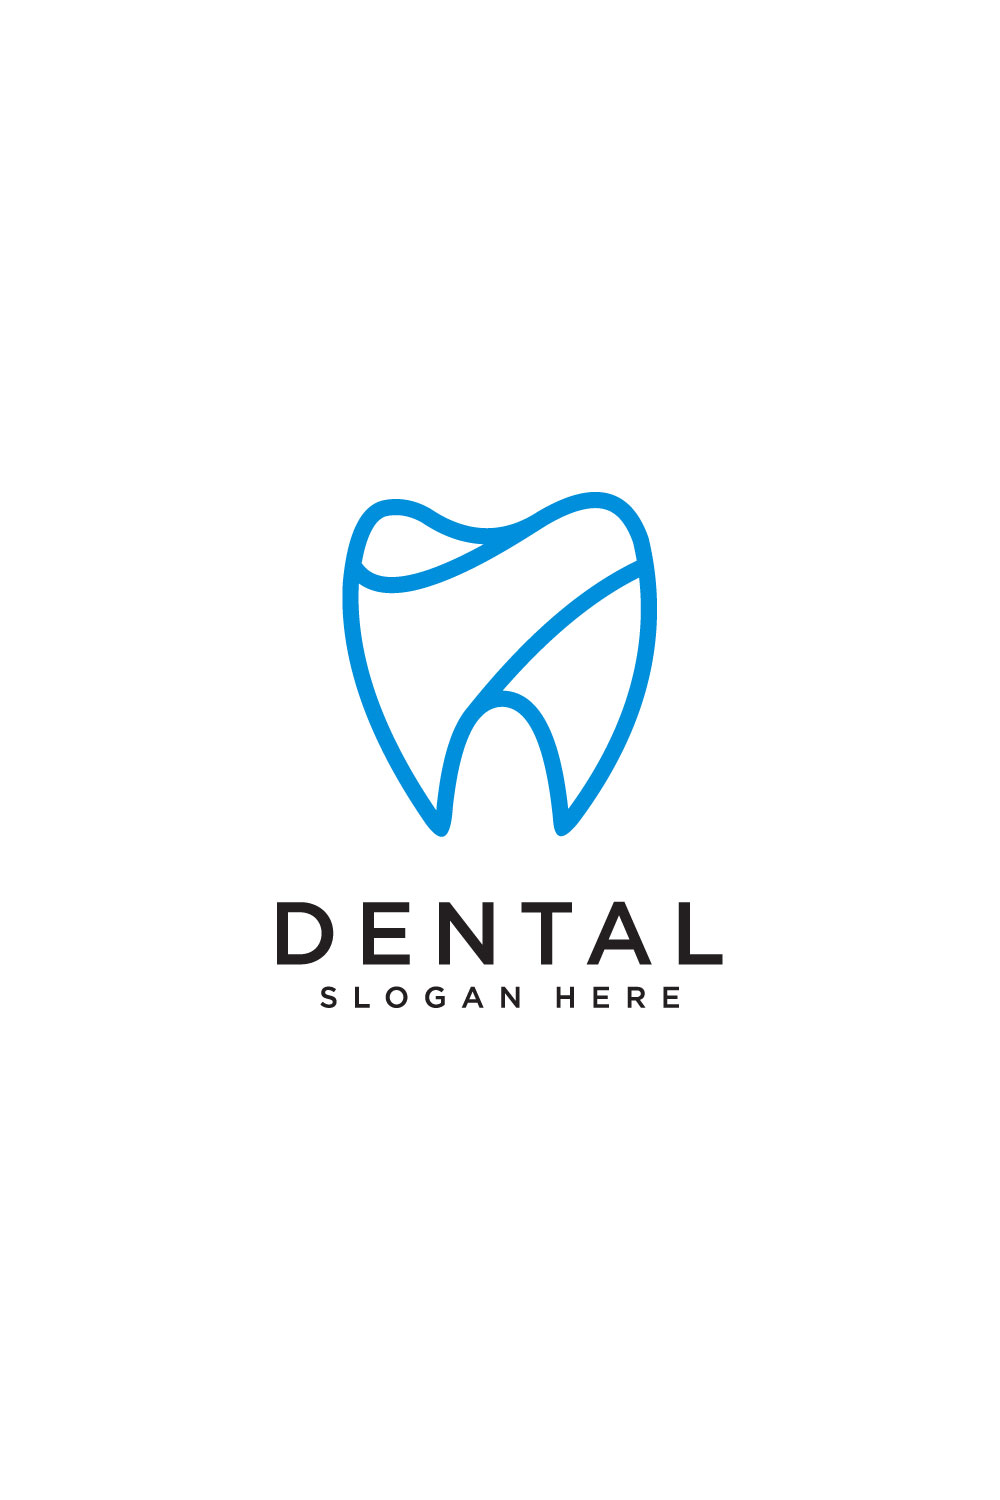 dental logo design vector pinterest preview image.